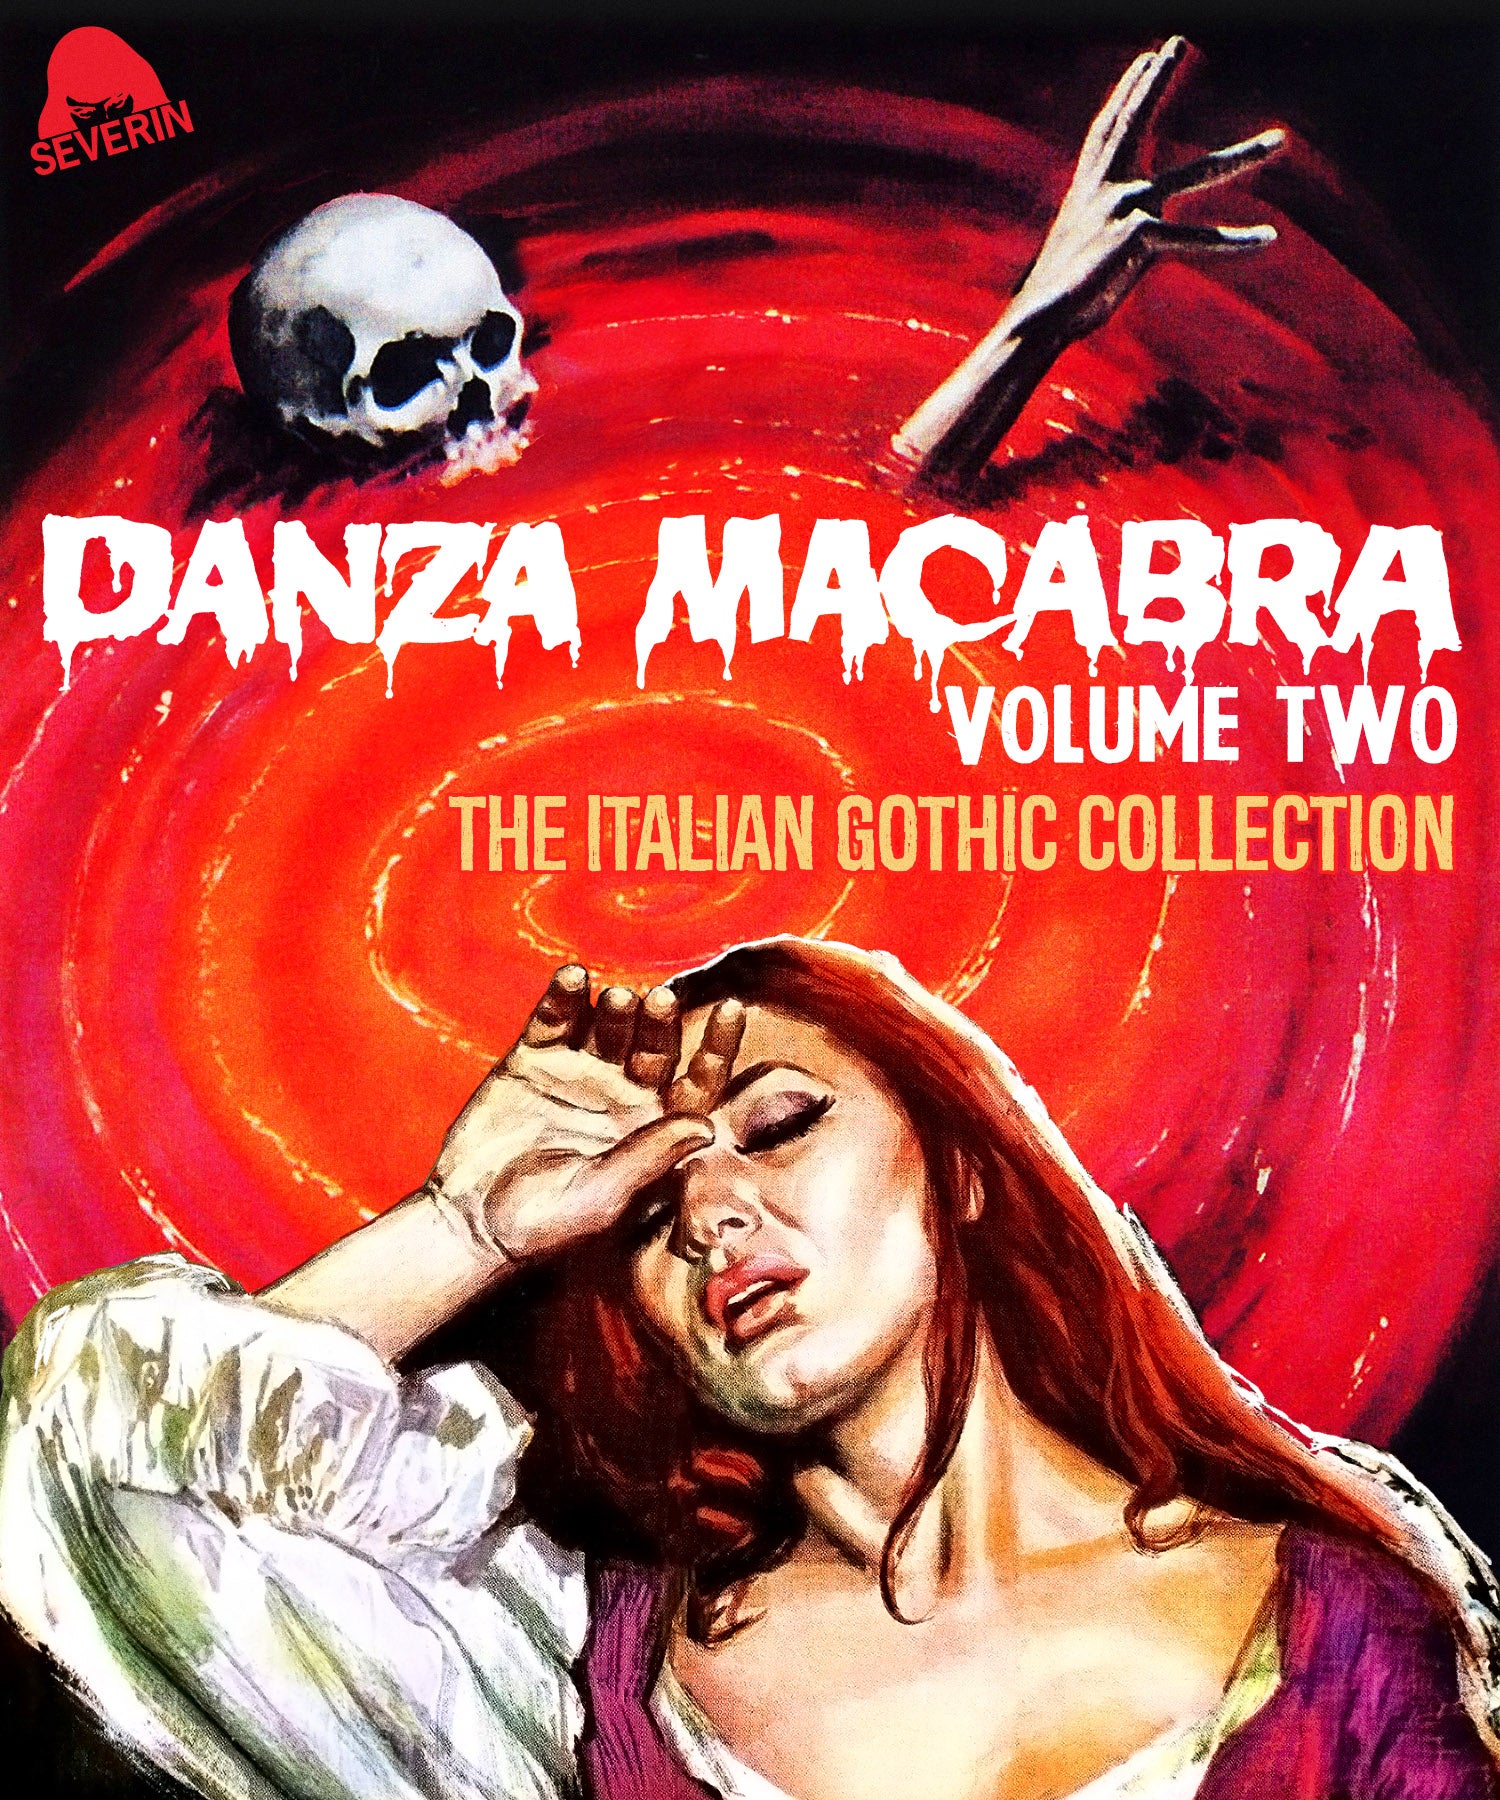 DANZA MACABRA VOLUME TWO: THE ITALIAN GOTHIC COLLECTION 4K UHD/BLU-RAY